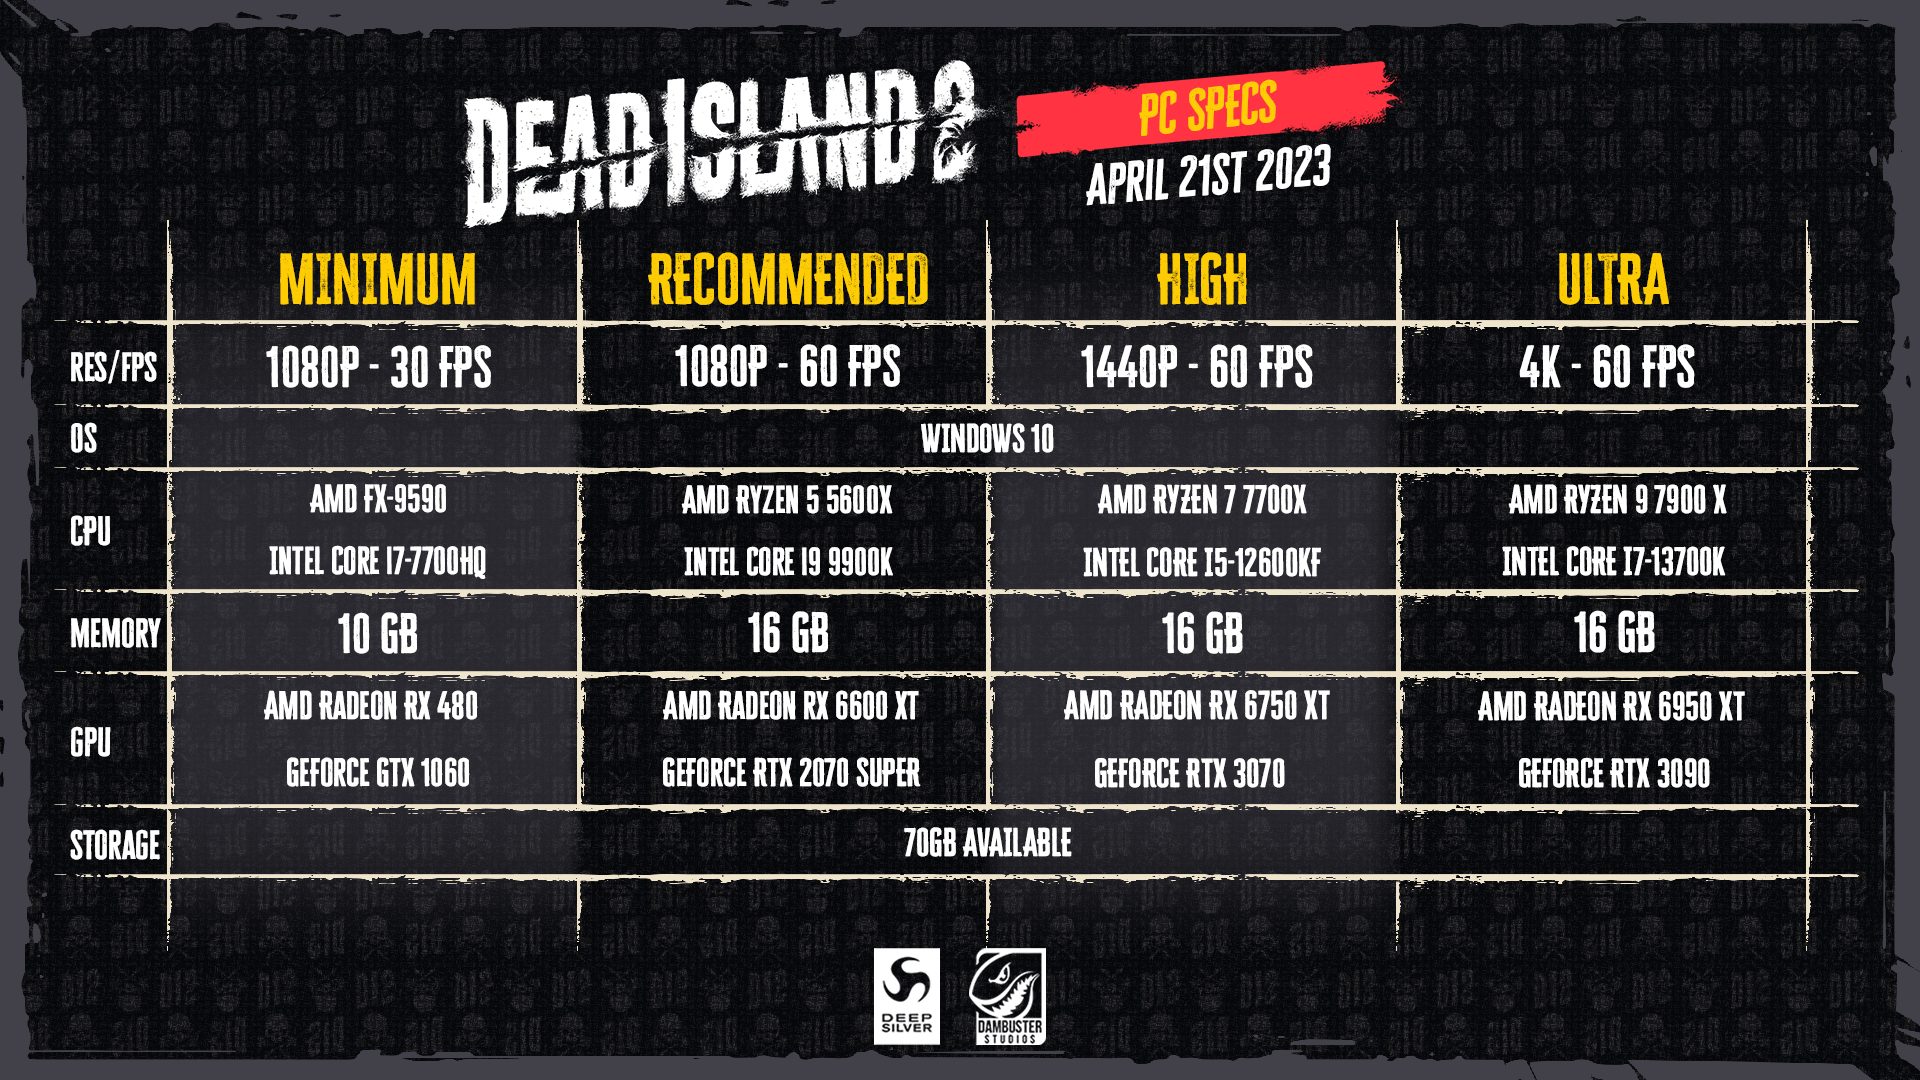 Dead Island 2 download the last version for windows